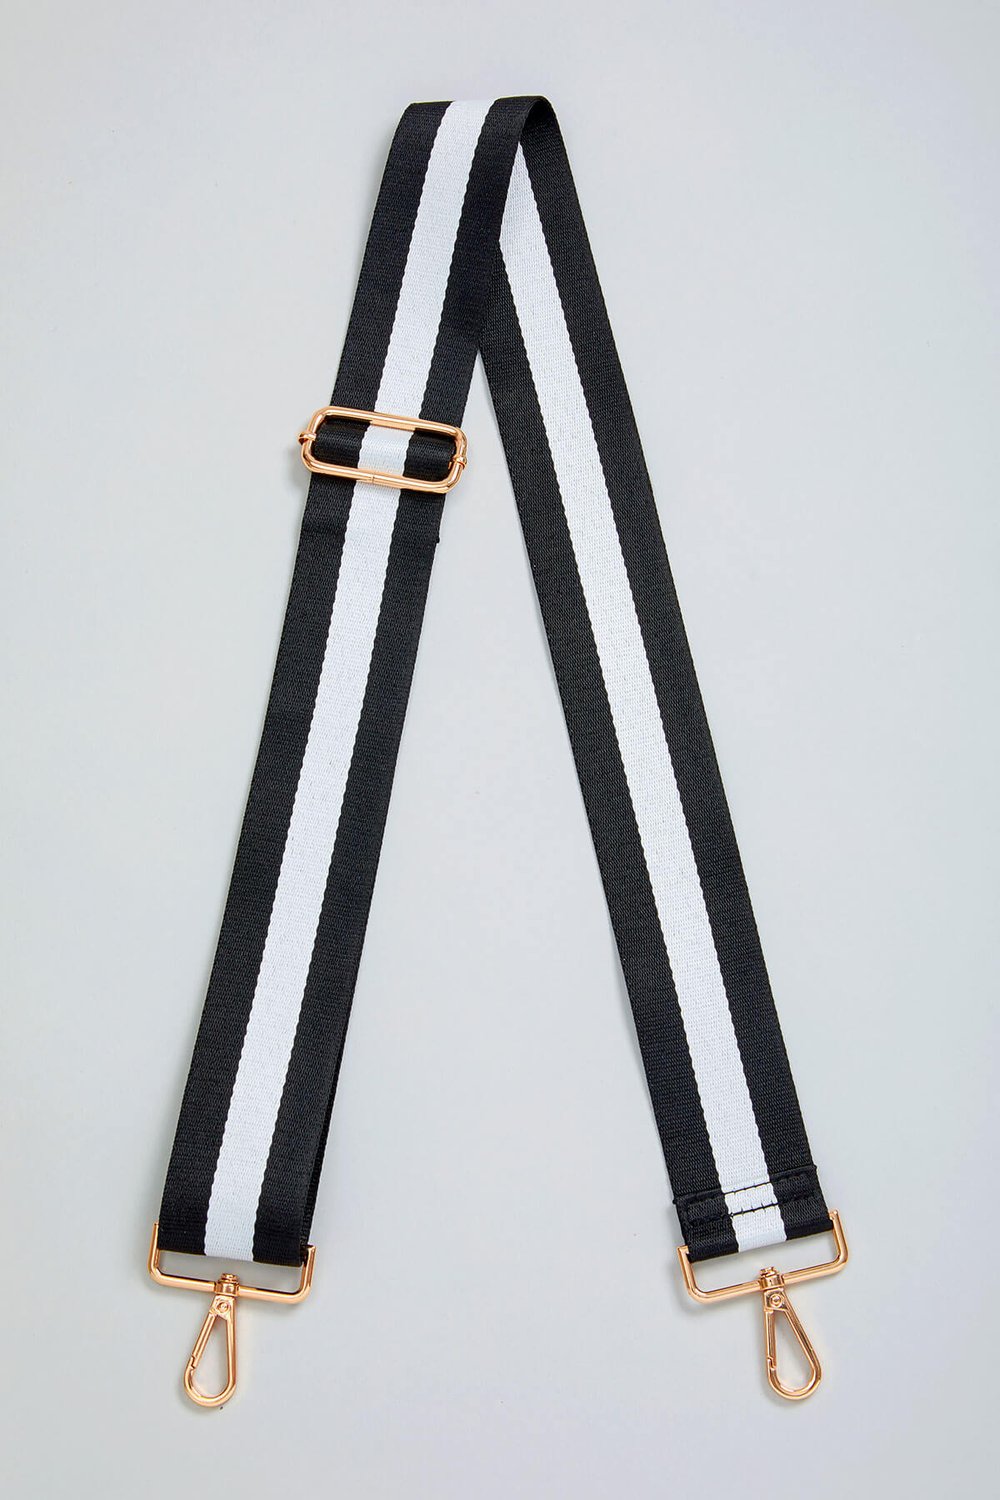 Ahdorned Guitar Style Navy/White Stripe Handbag Strap- Gold or Silver  Hardware — DazzleBar